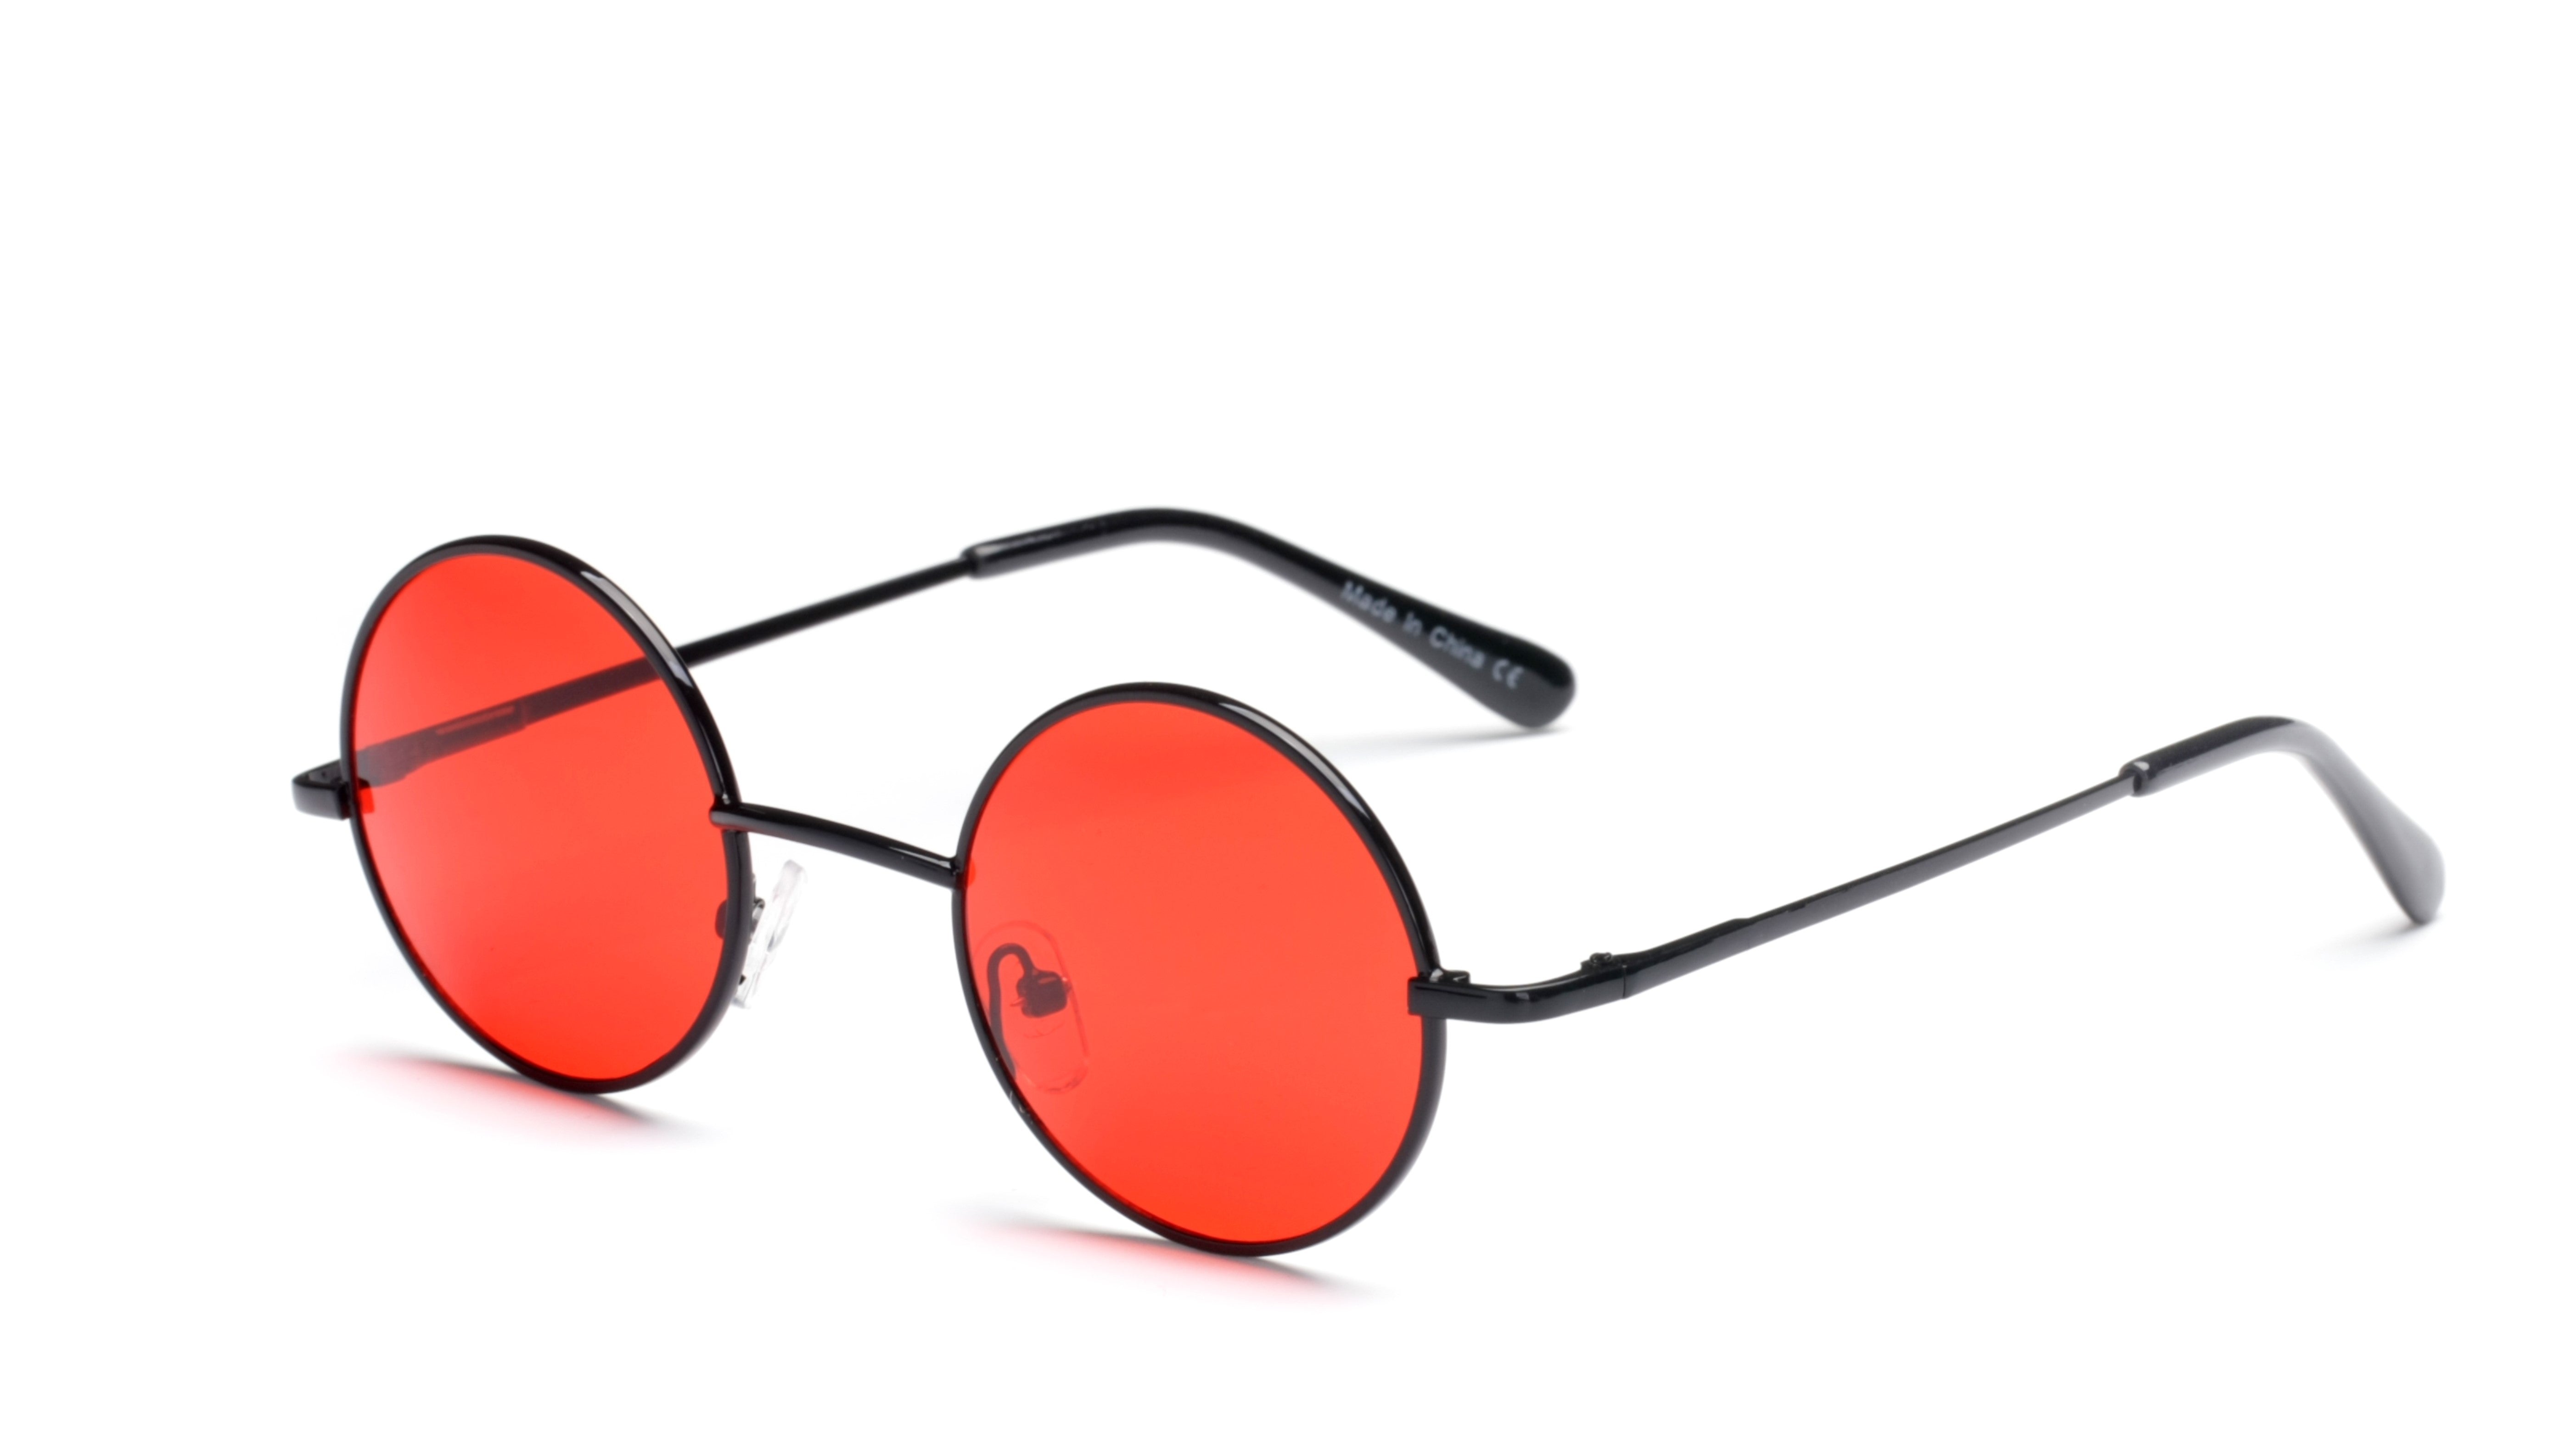 S1114 - Unisex Round Fashion Sunglasses Black/Red